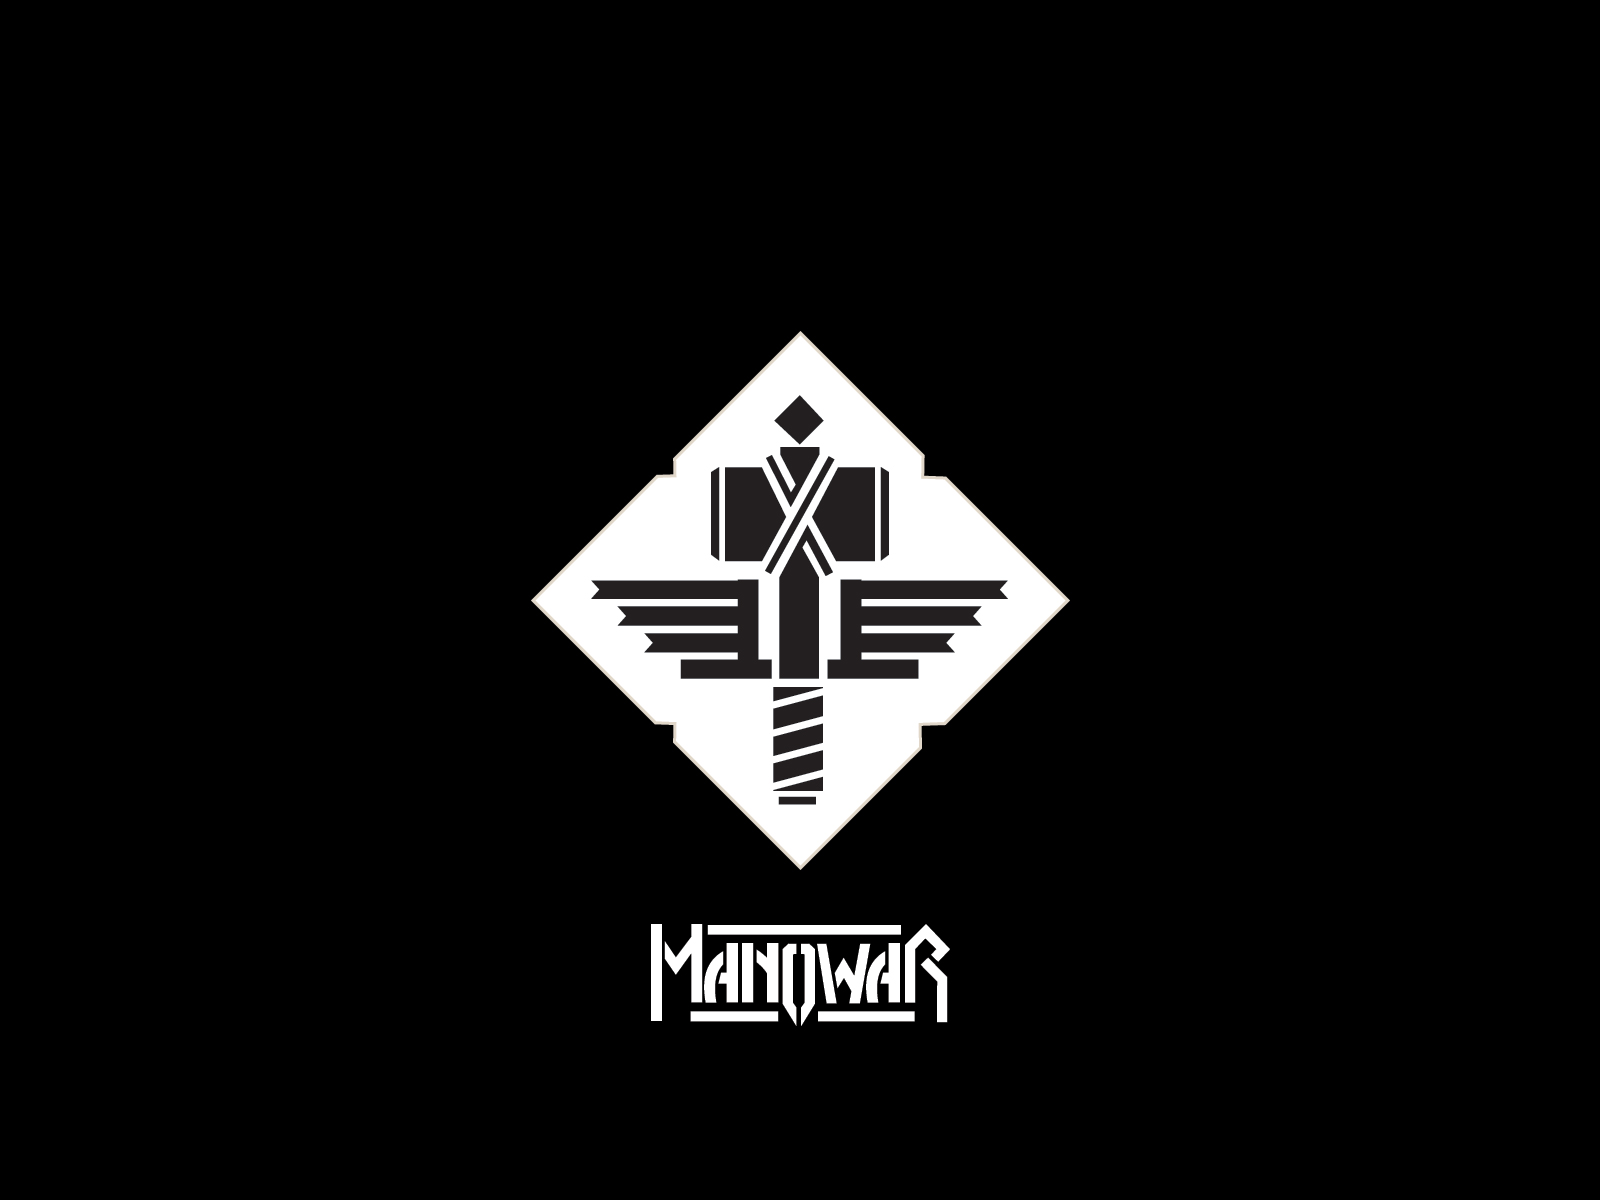 Music Manowar 1600x1200